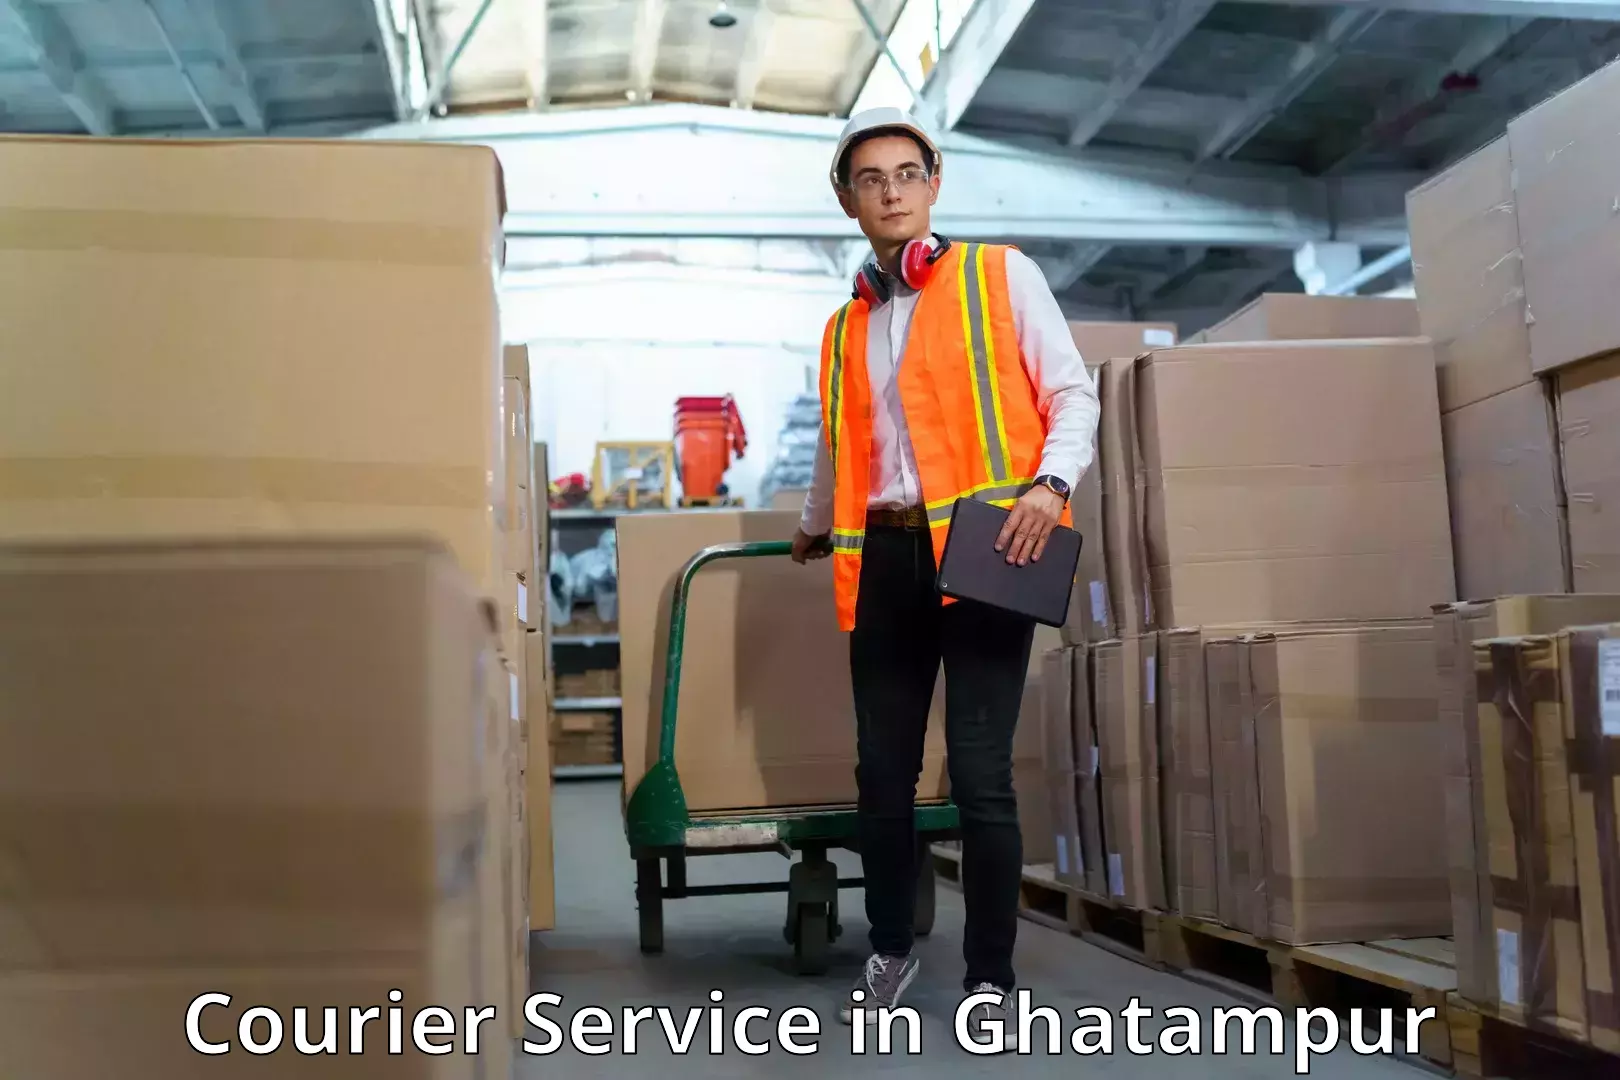 Efficient parcel service in Ghatampur